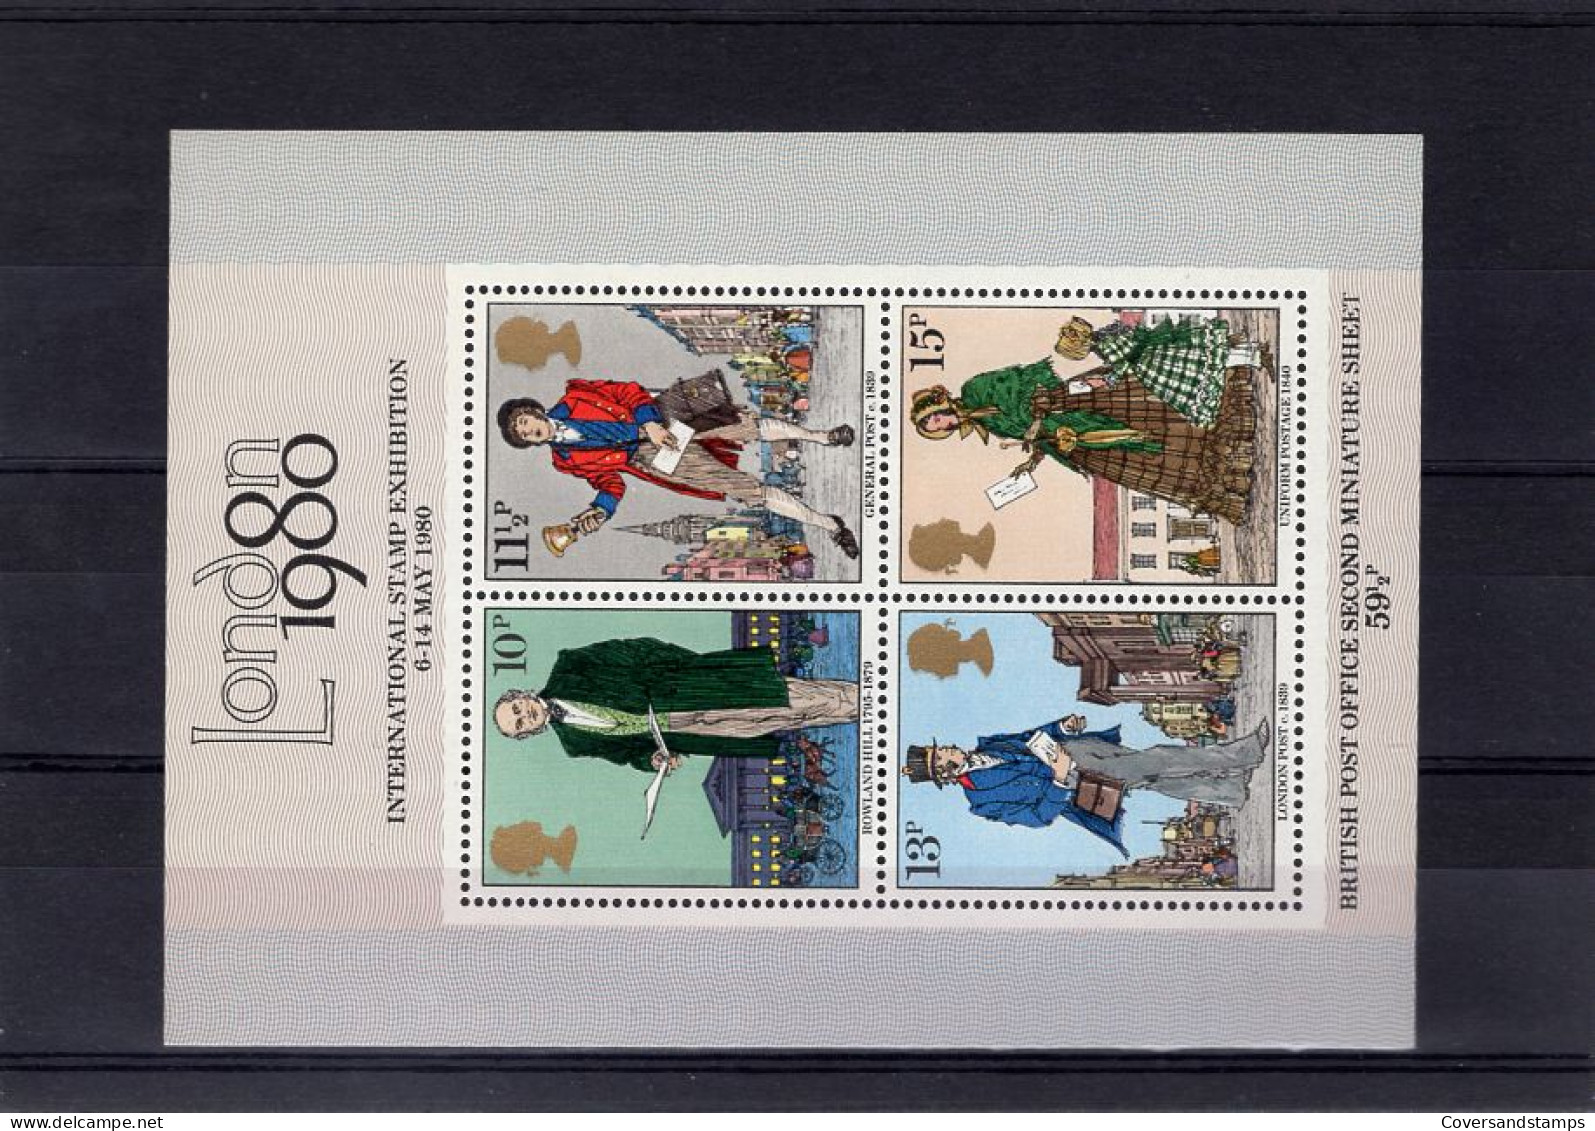  Groot-Brittannië : London 1980 MNH ** - Blocks & Miniature Sheets